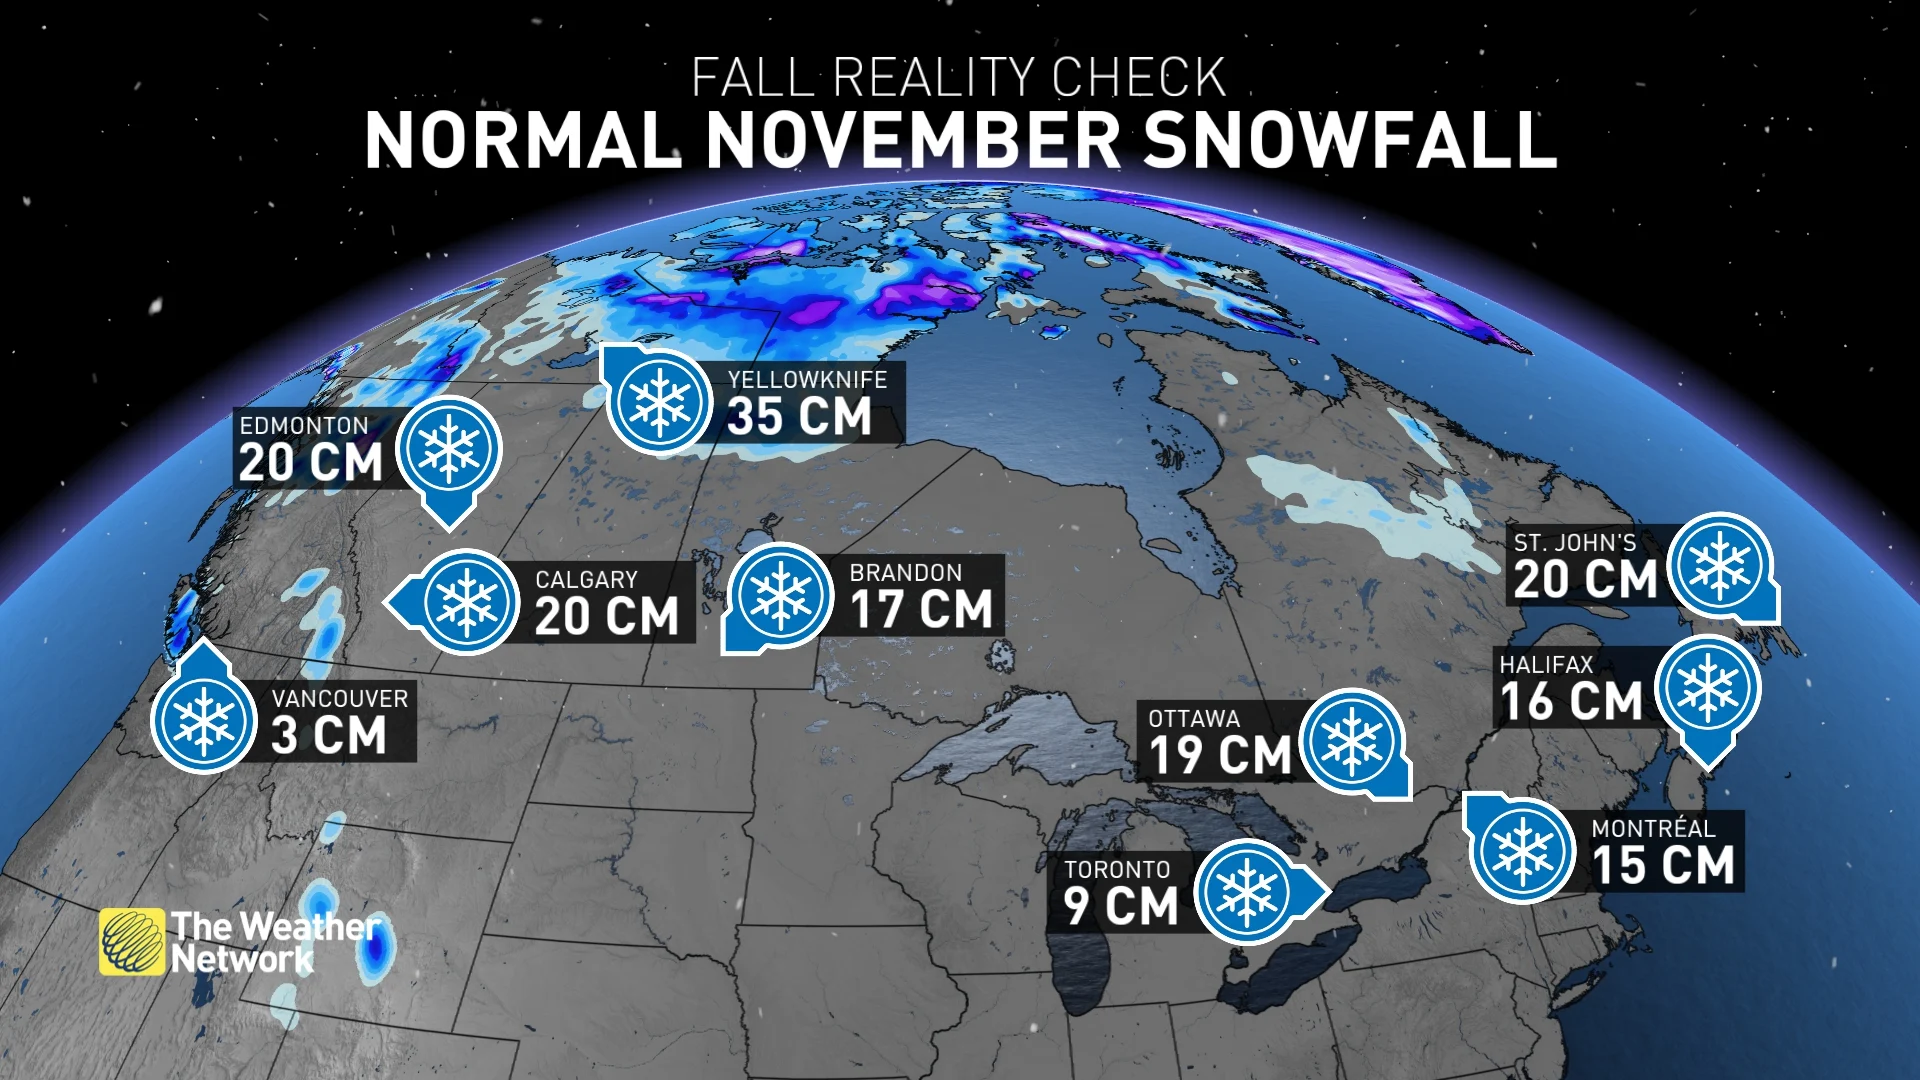 November Snowfall Normals for Canada - Fall Forecast 2022